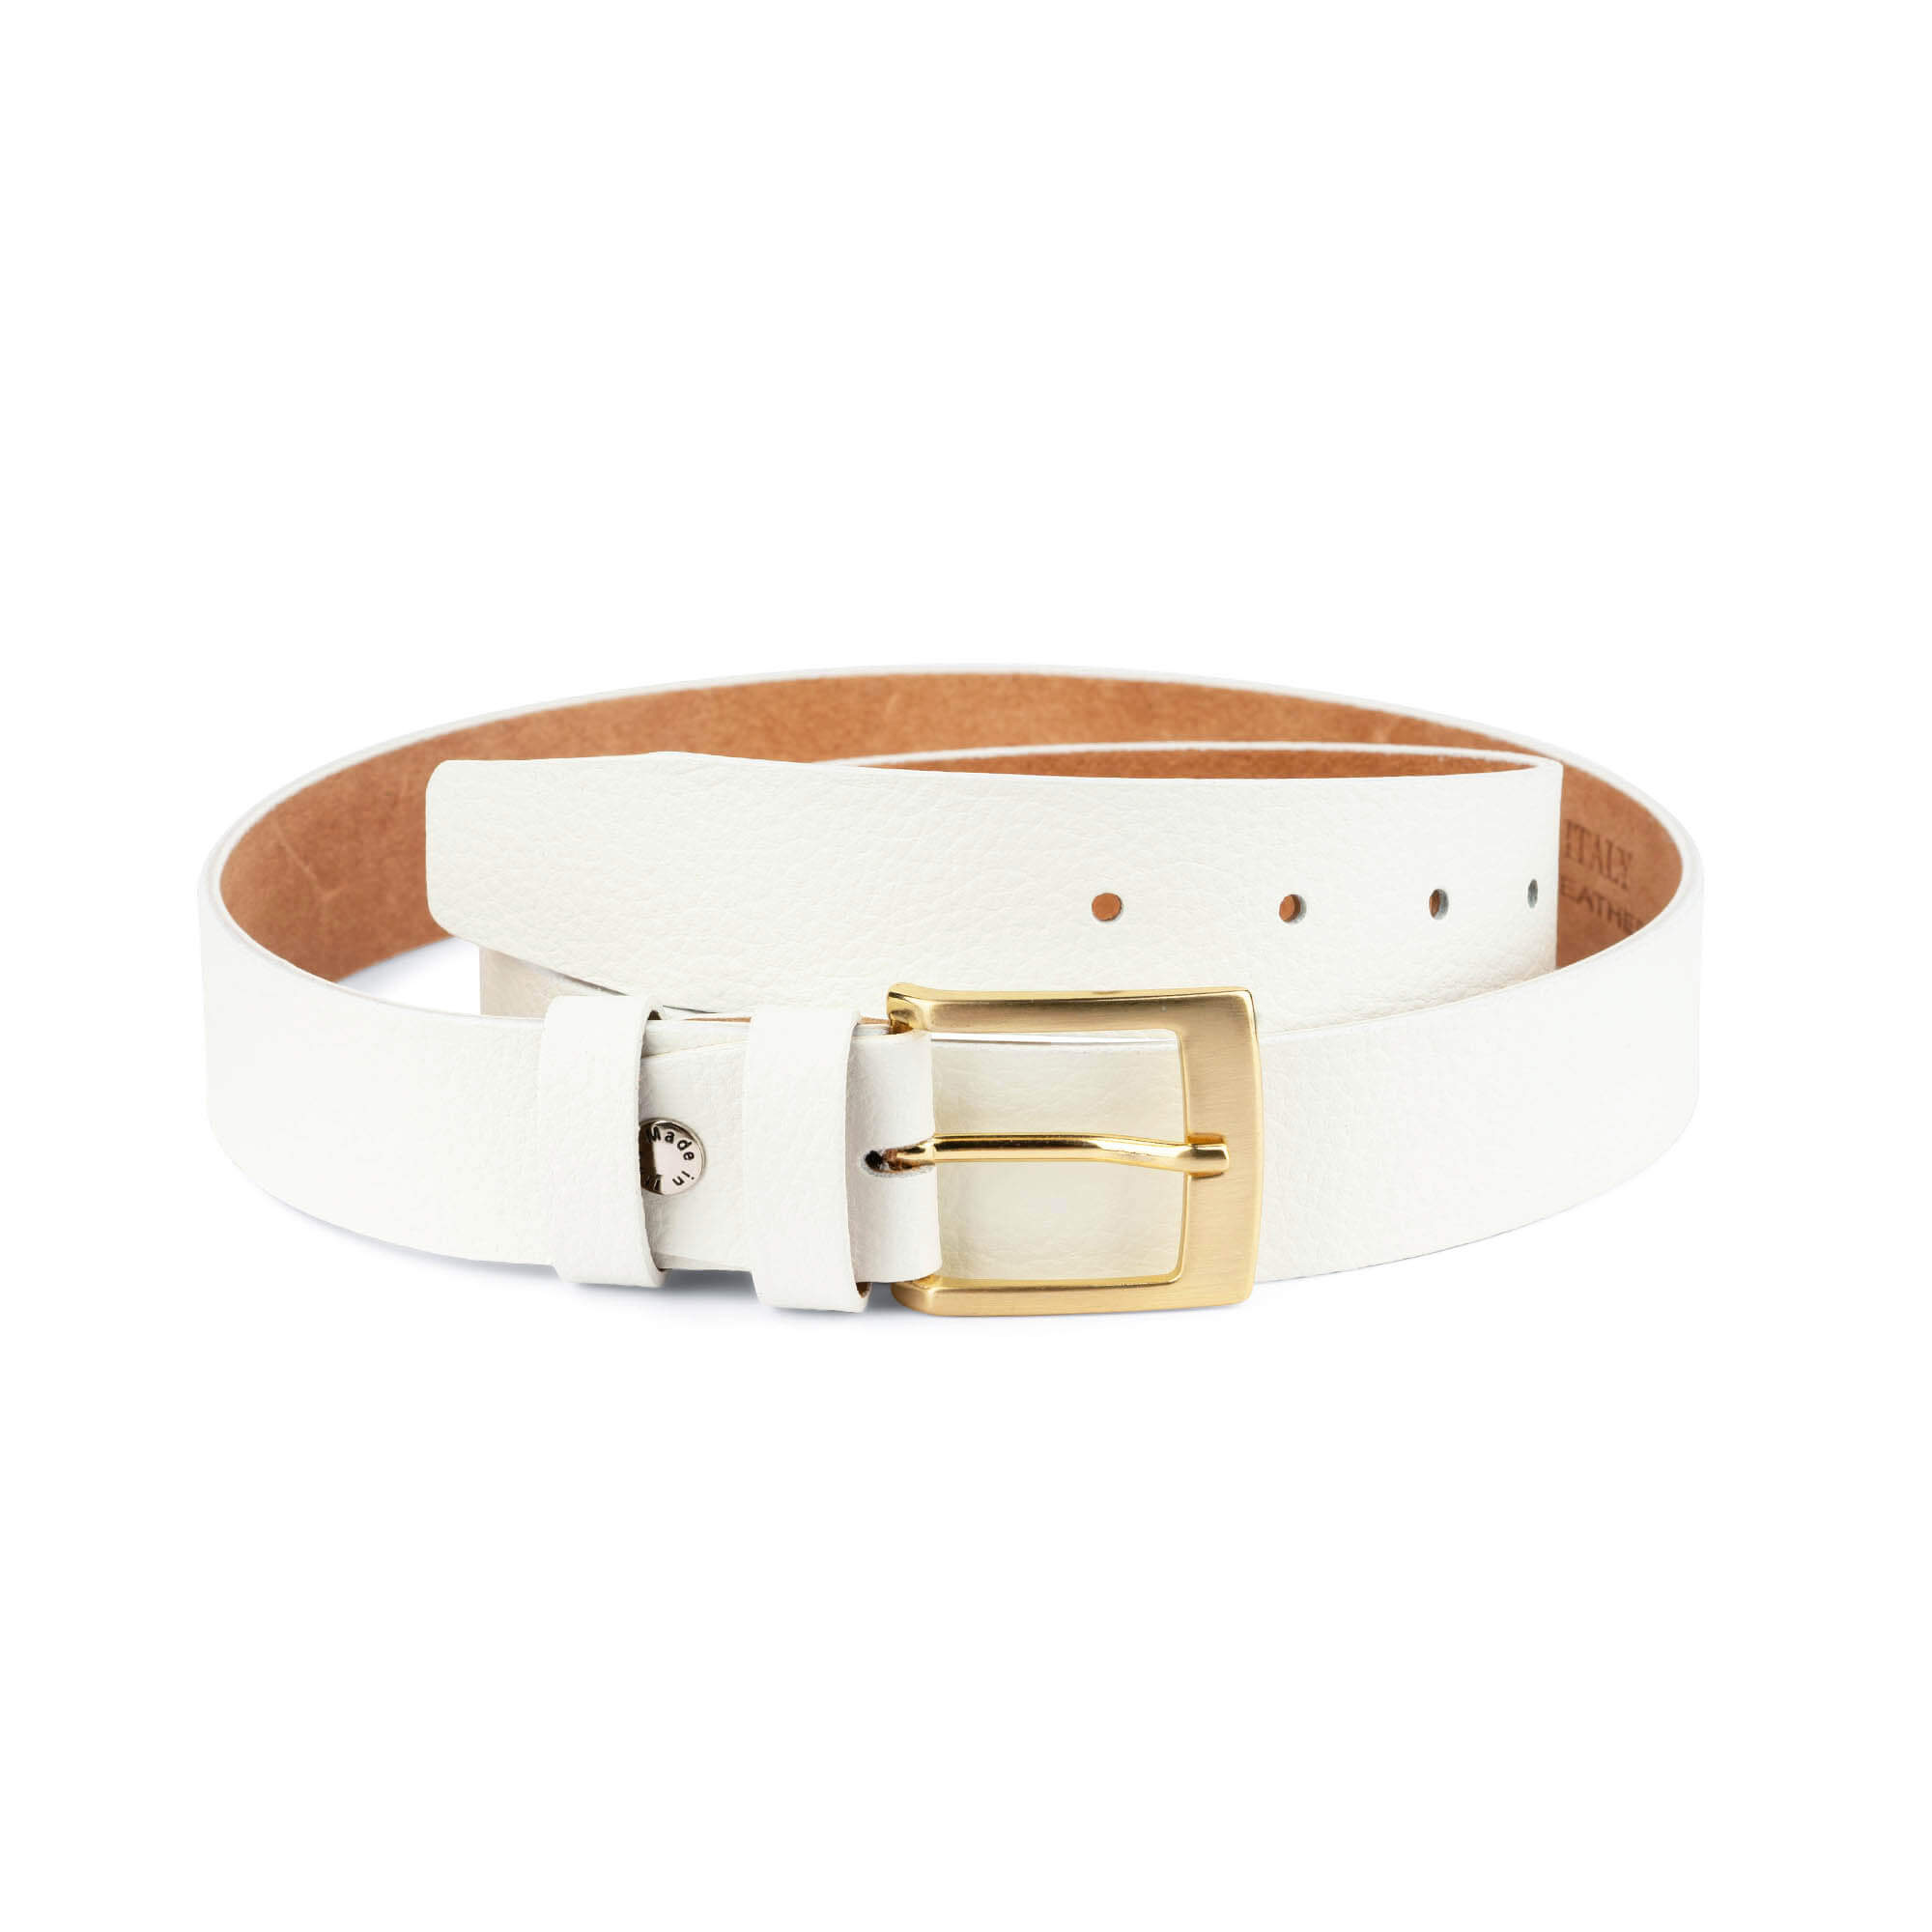 Buy Mens White Belt With Gold Buckle | LeatherBeltsOnline.com